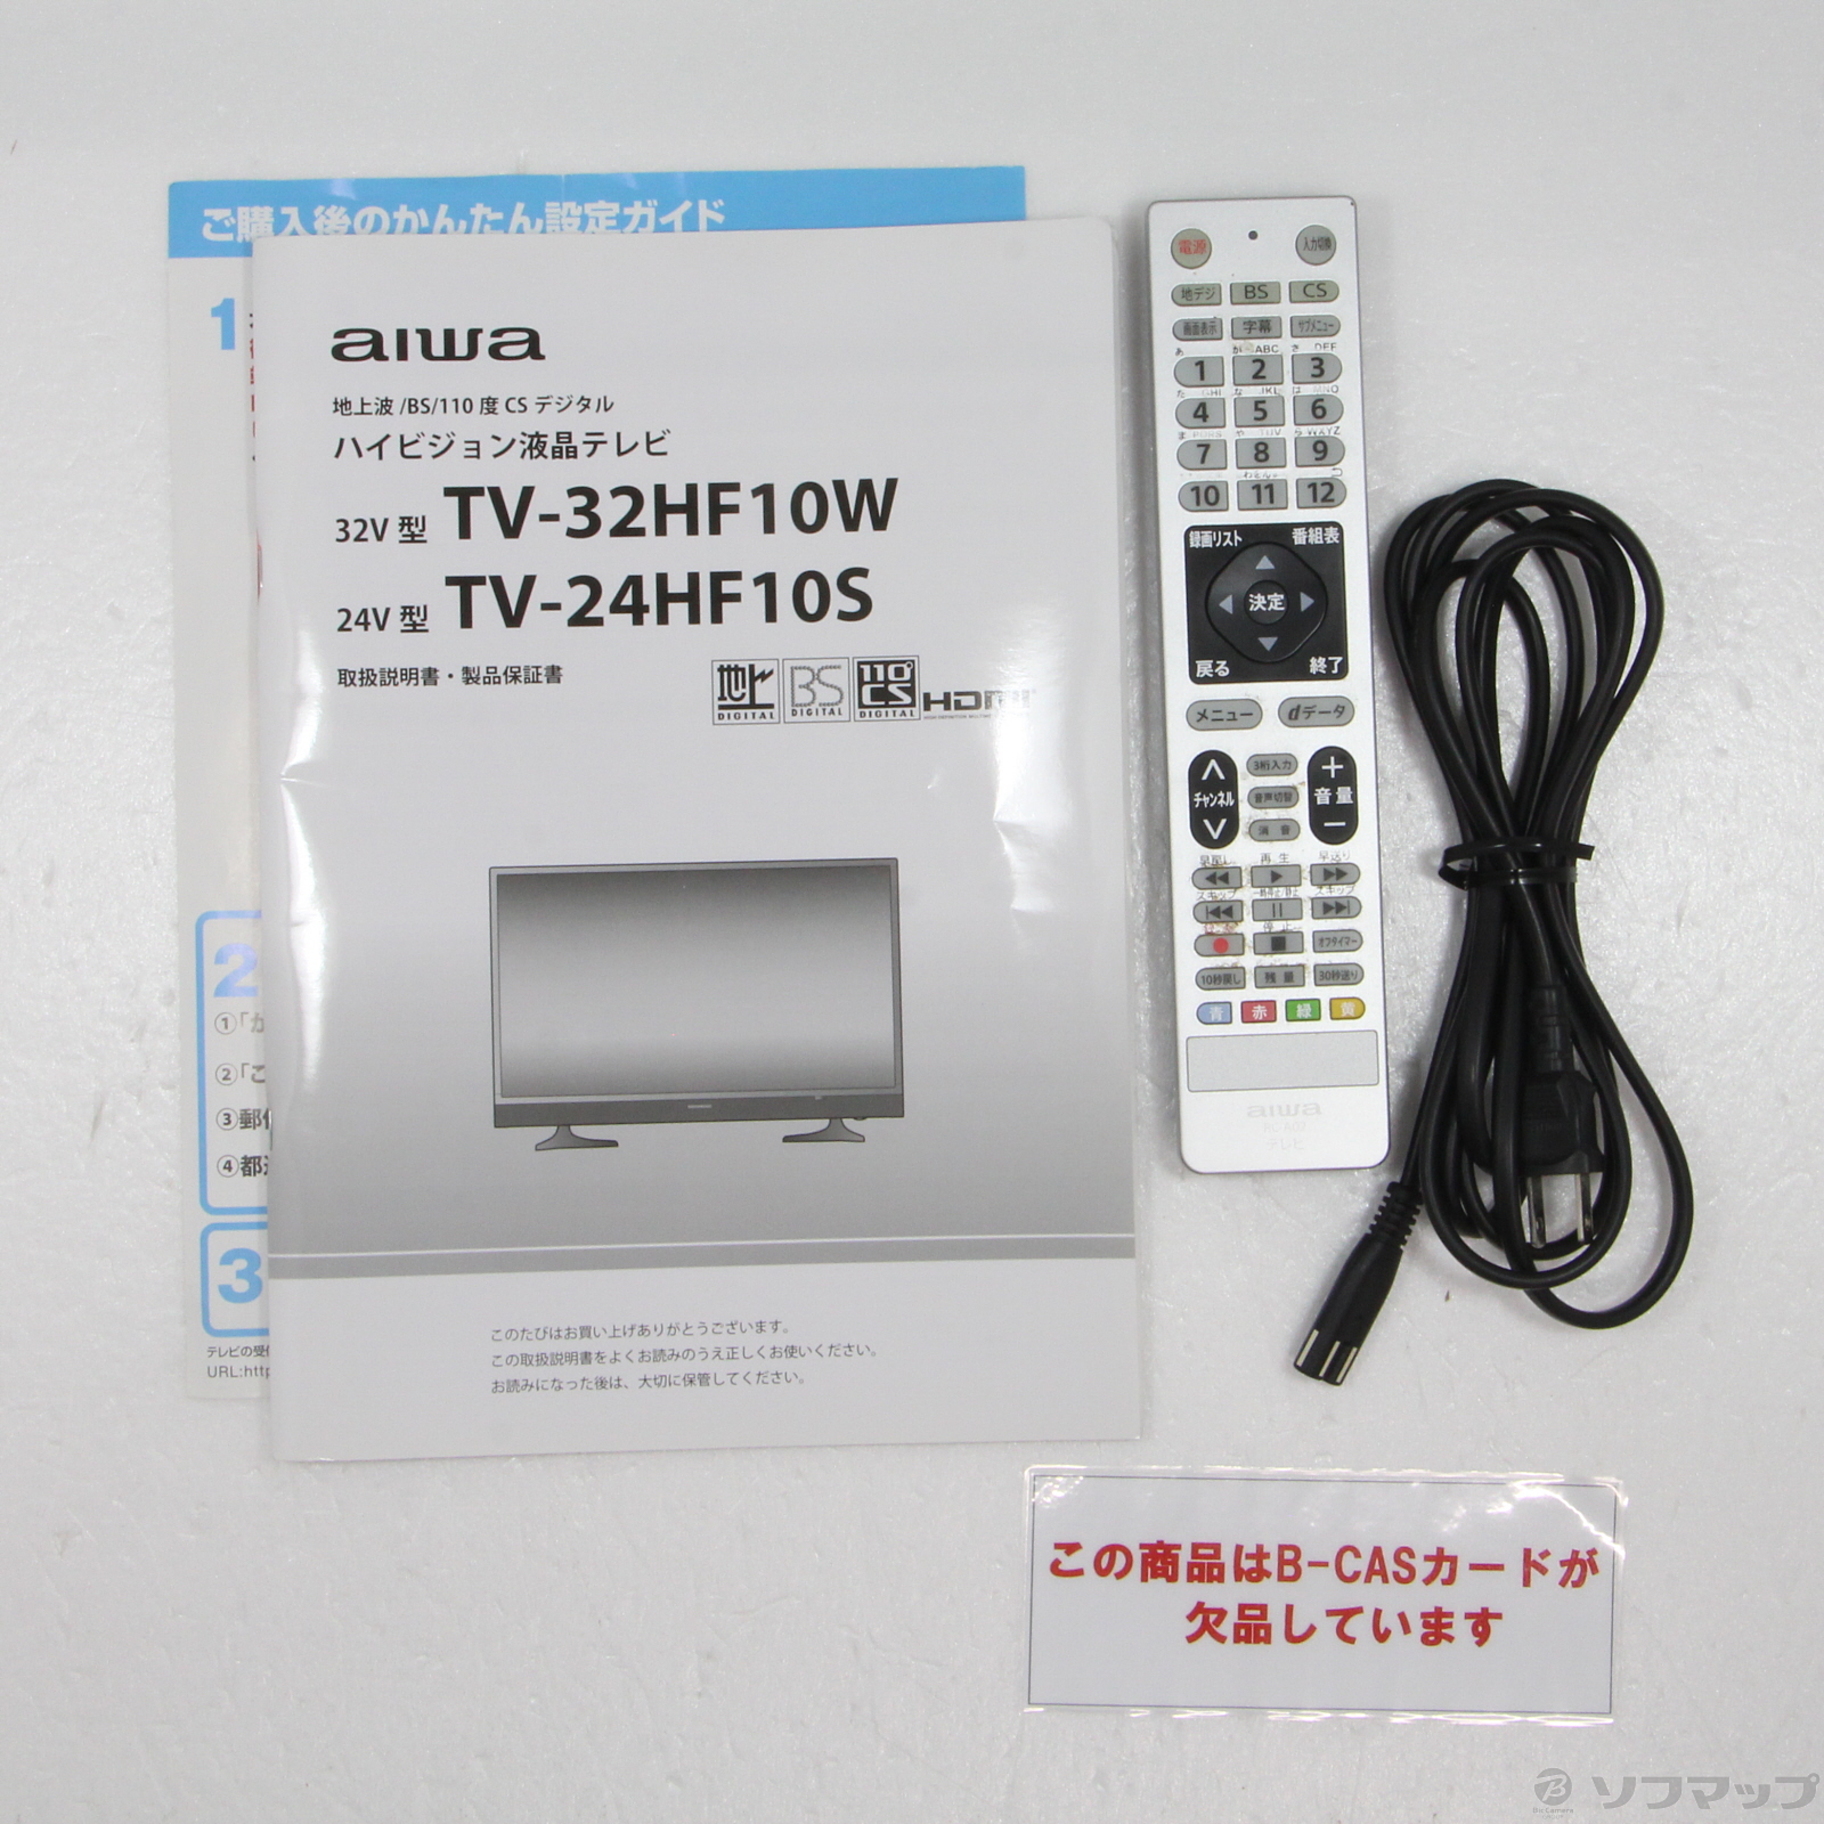 TV-32HF10W 液晶テレビ aiwa [32V型  ハイビジョン] - 4